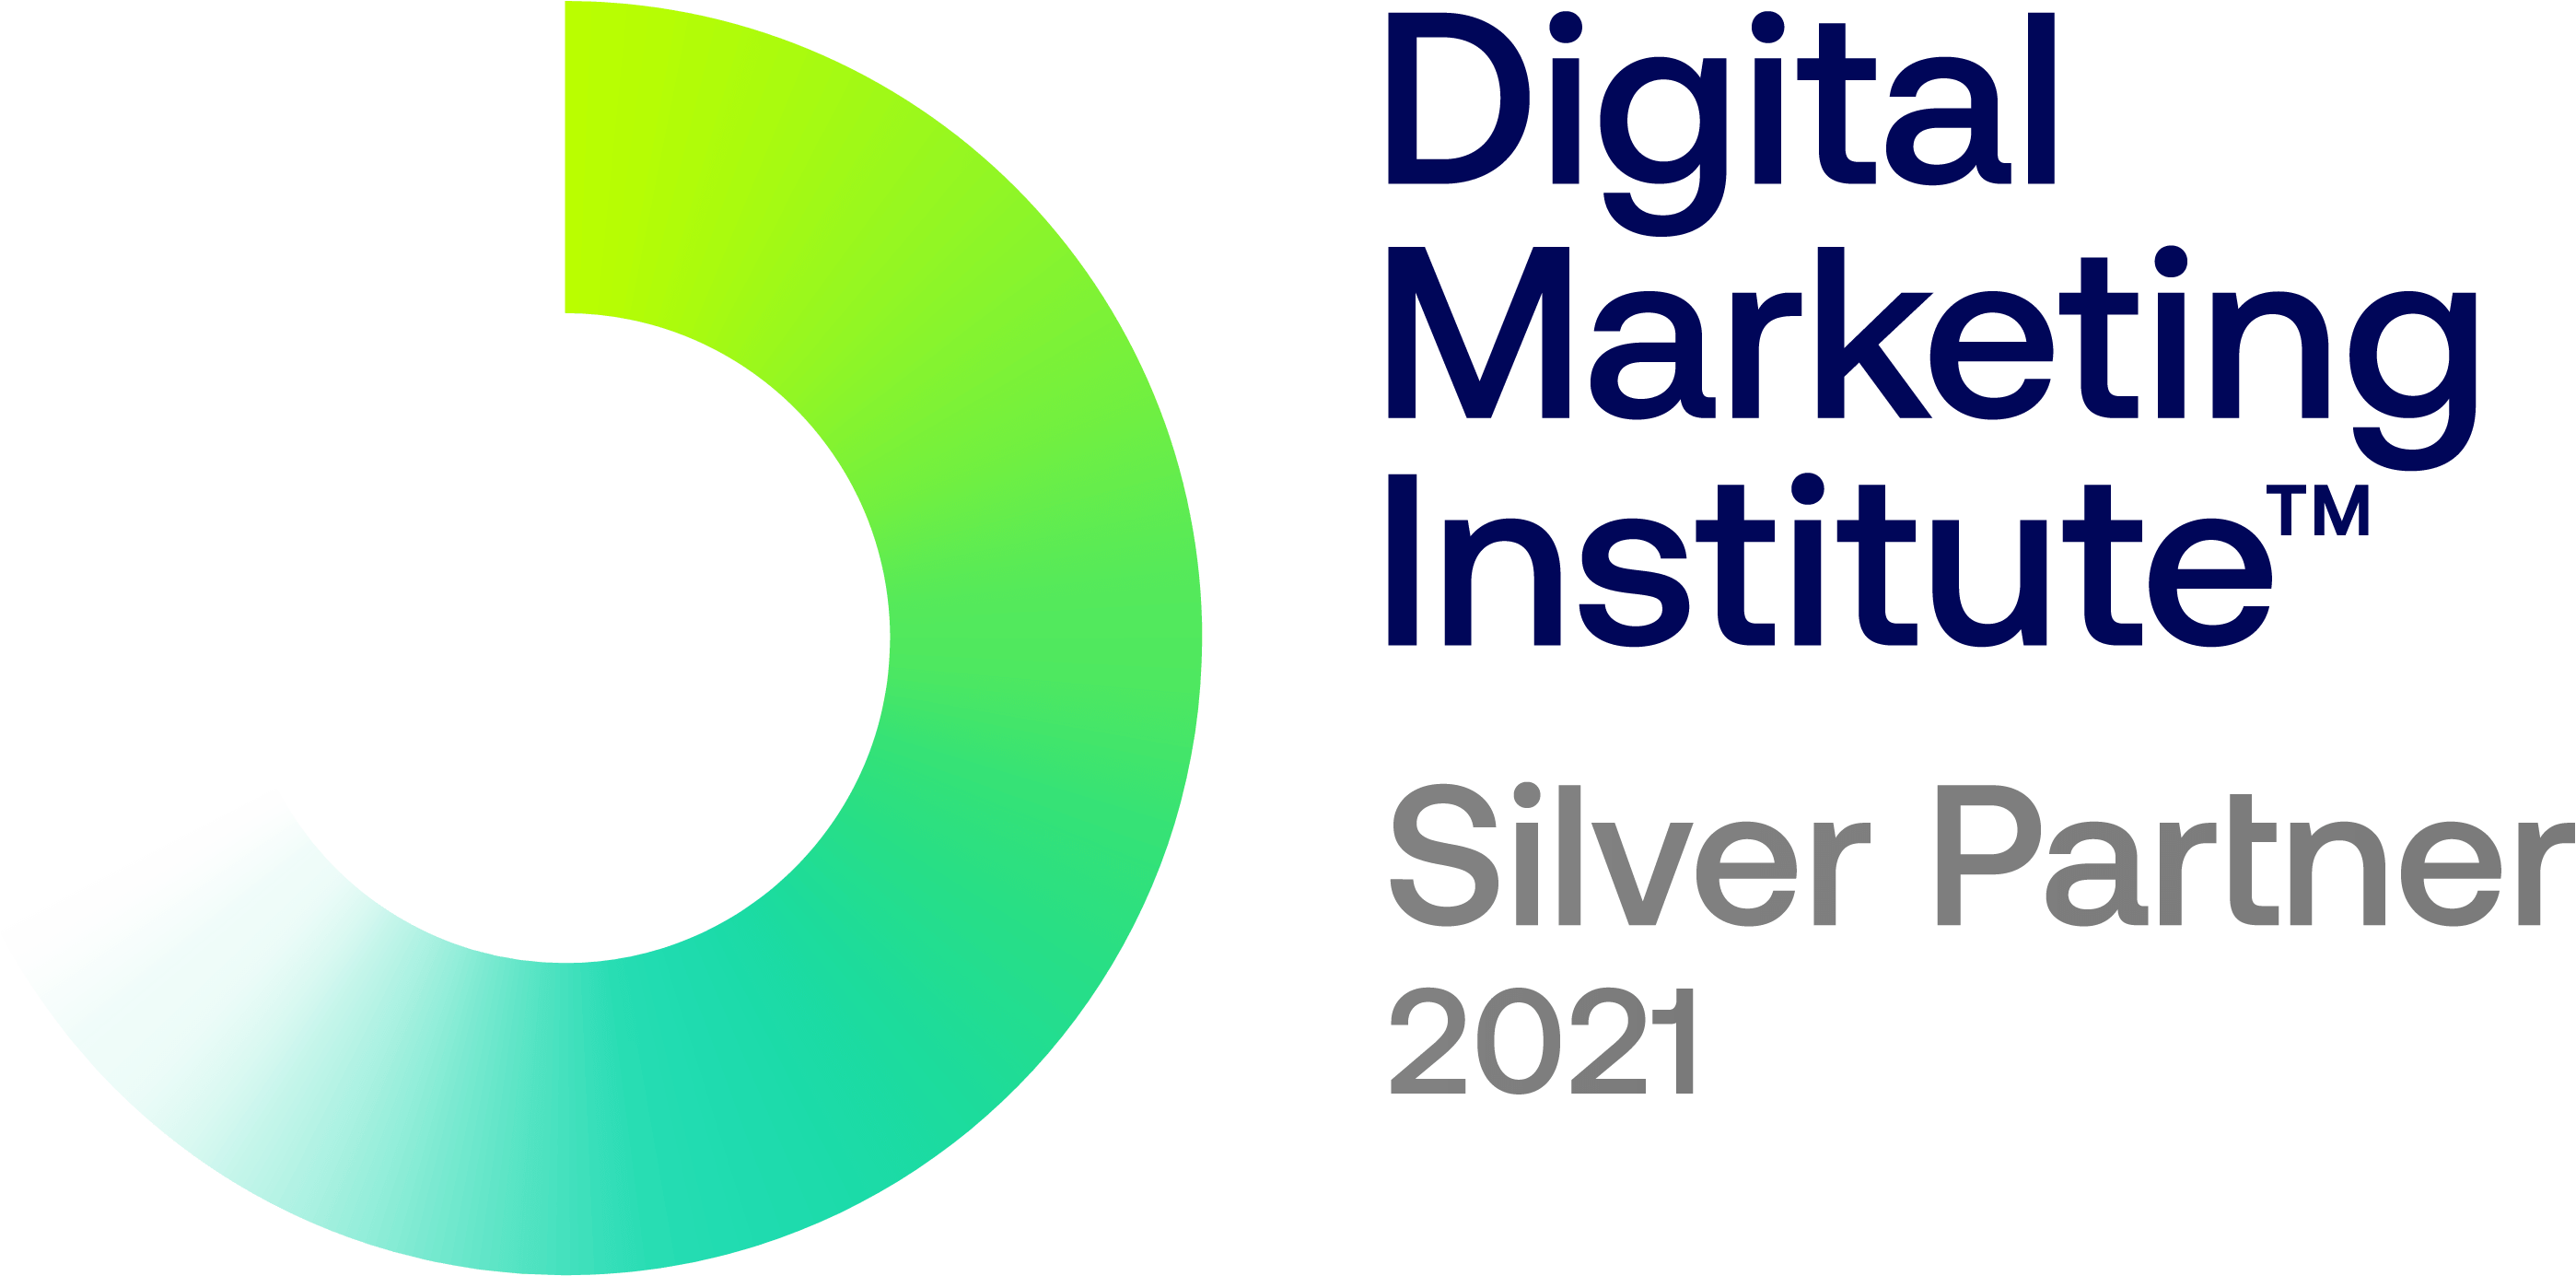 Digital Marketing Institute Silver Partner